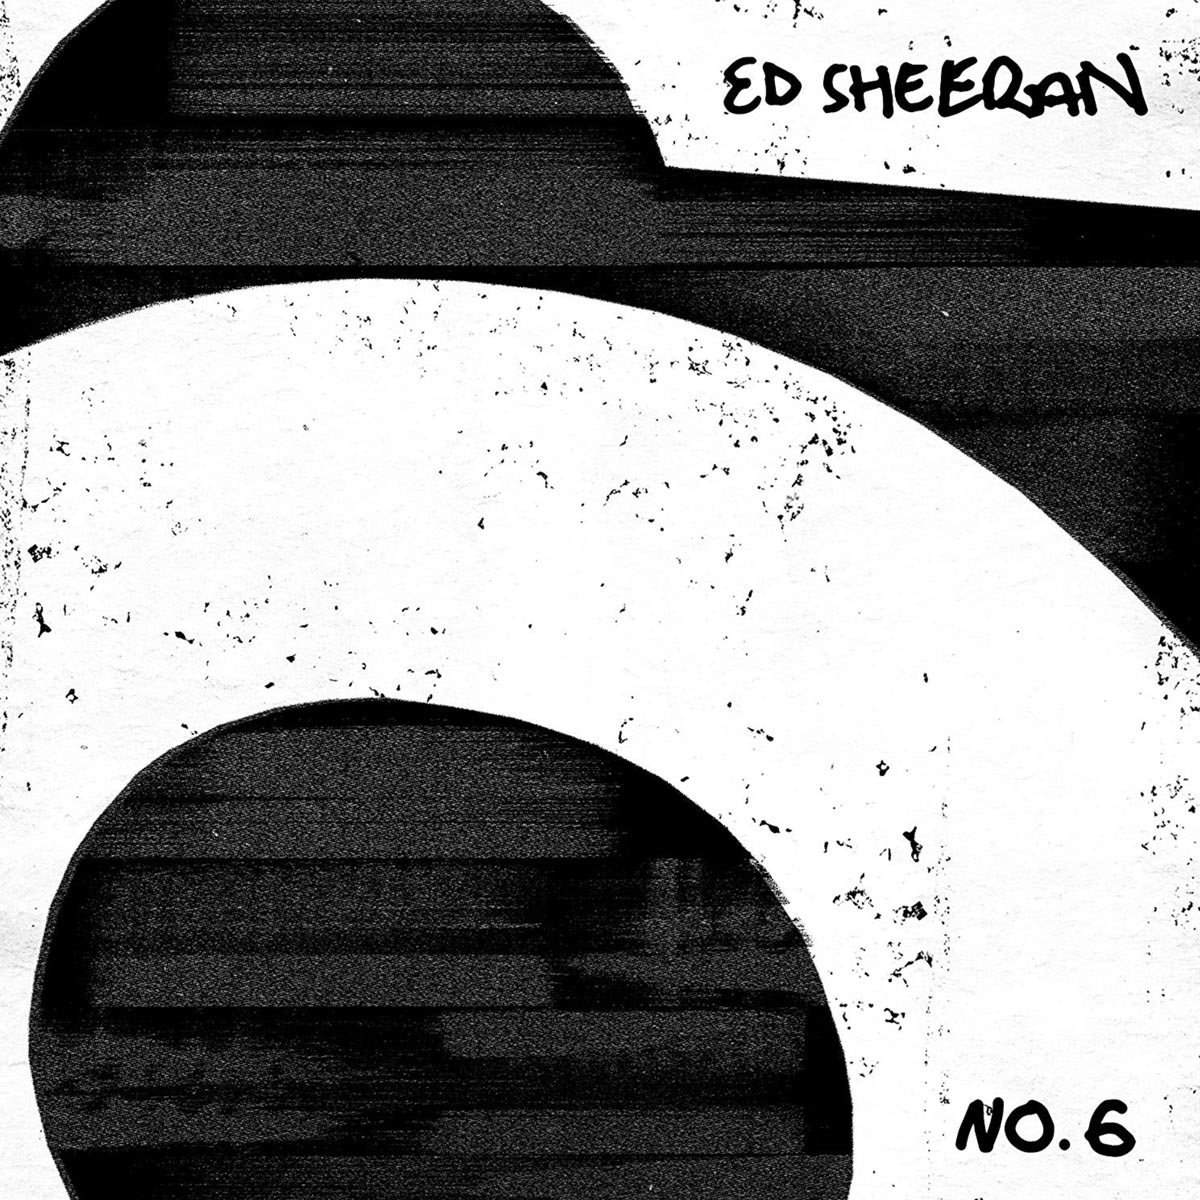 Sheeran Ed: No 6 collaborations project (45 rpm)